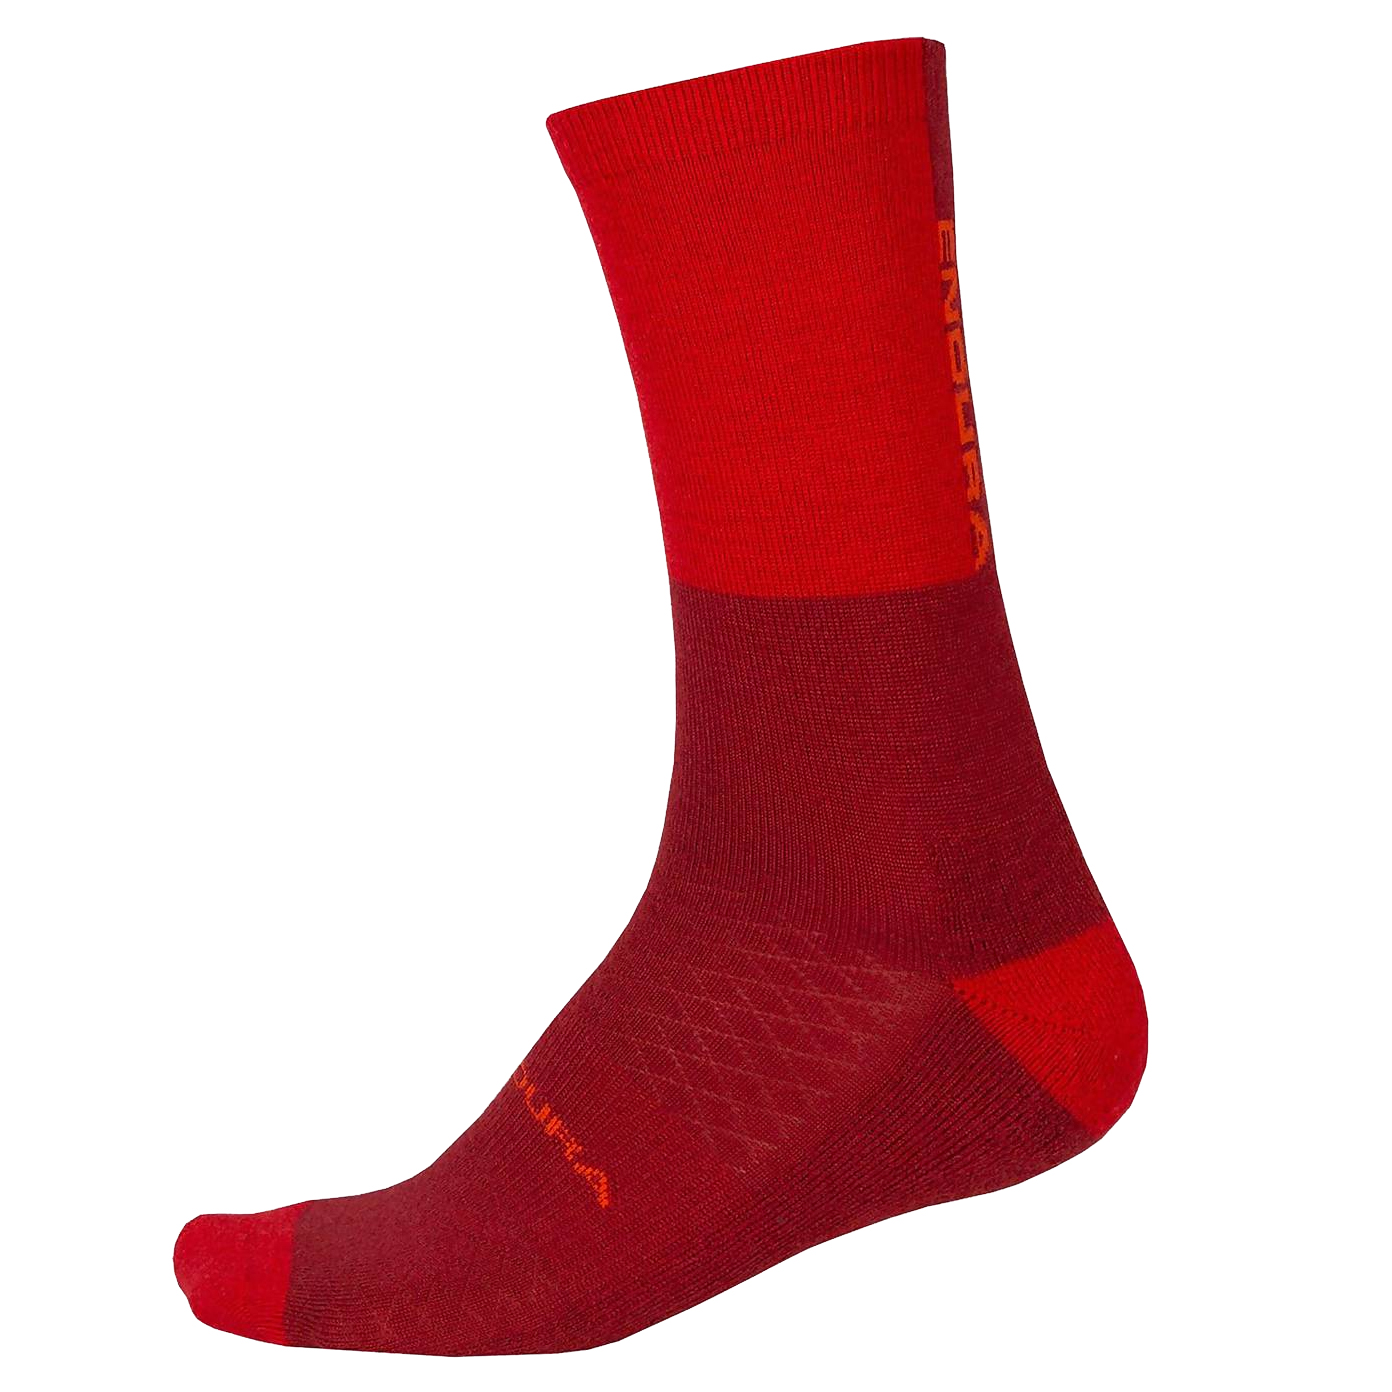 Endura | BaaBaa Merino Winter Sock (Single) Men's | Size Small/Medium in Rust Red